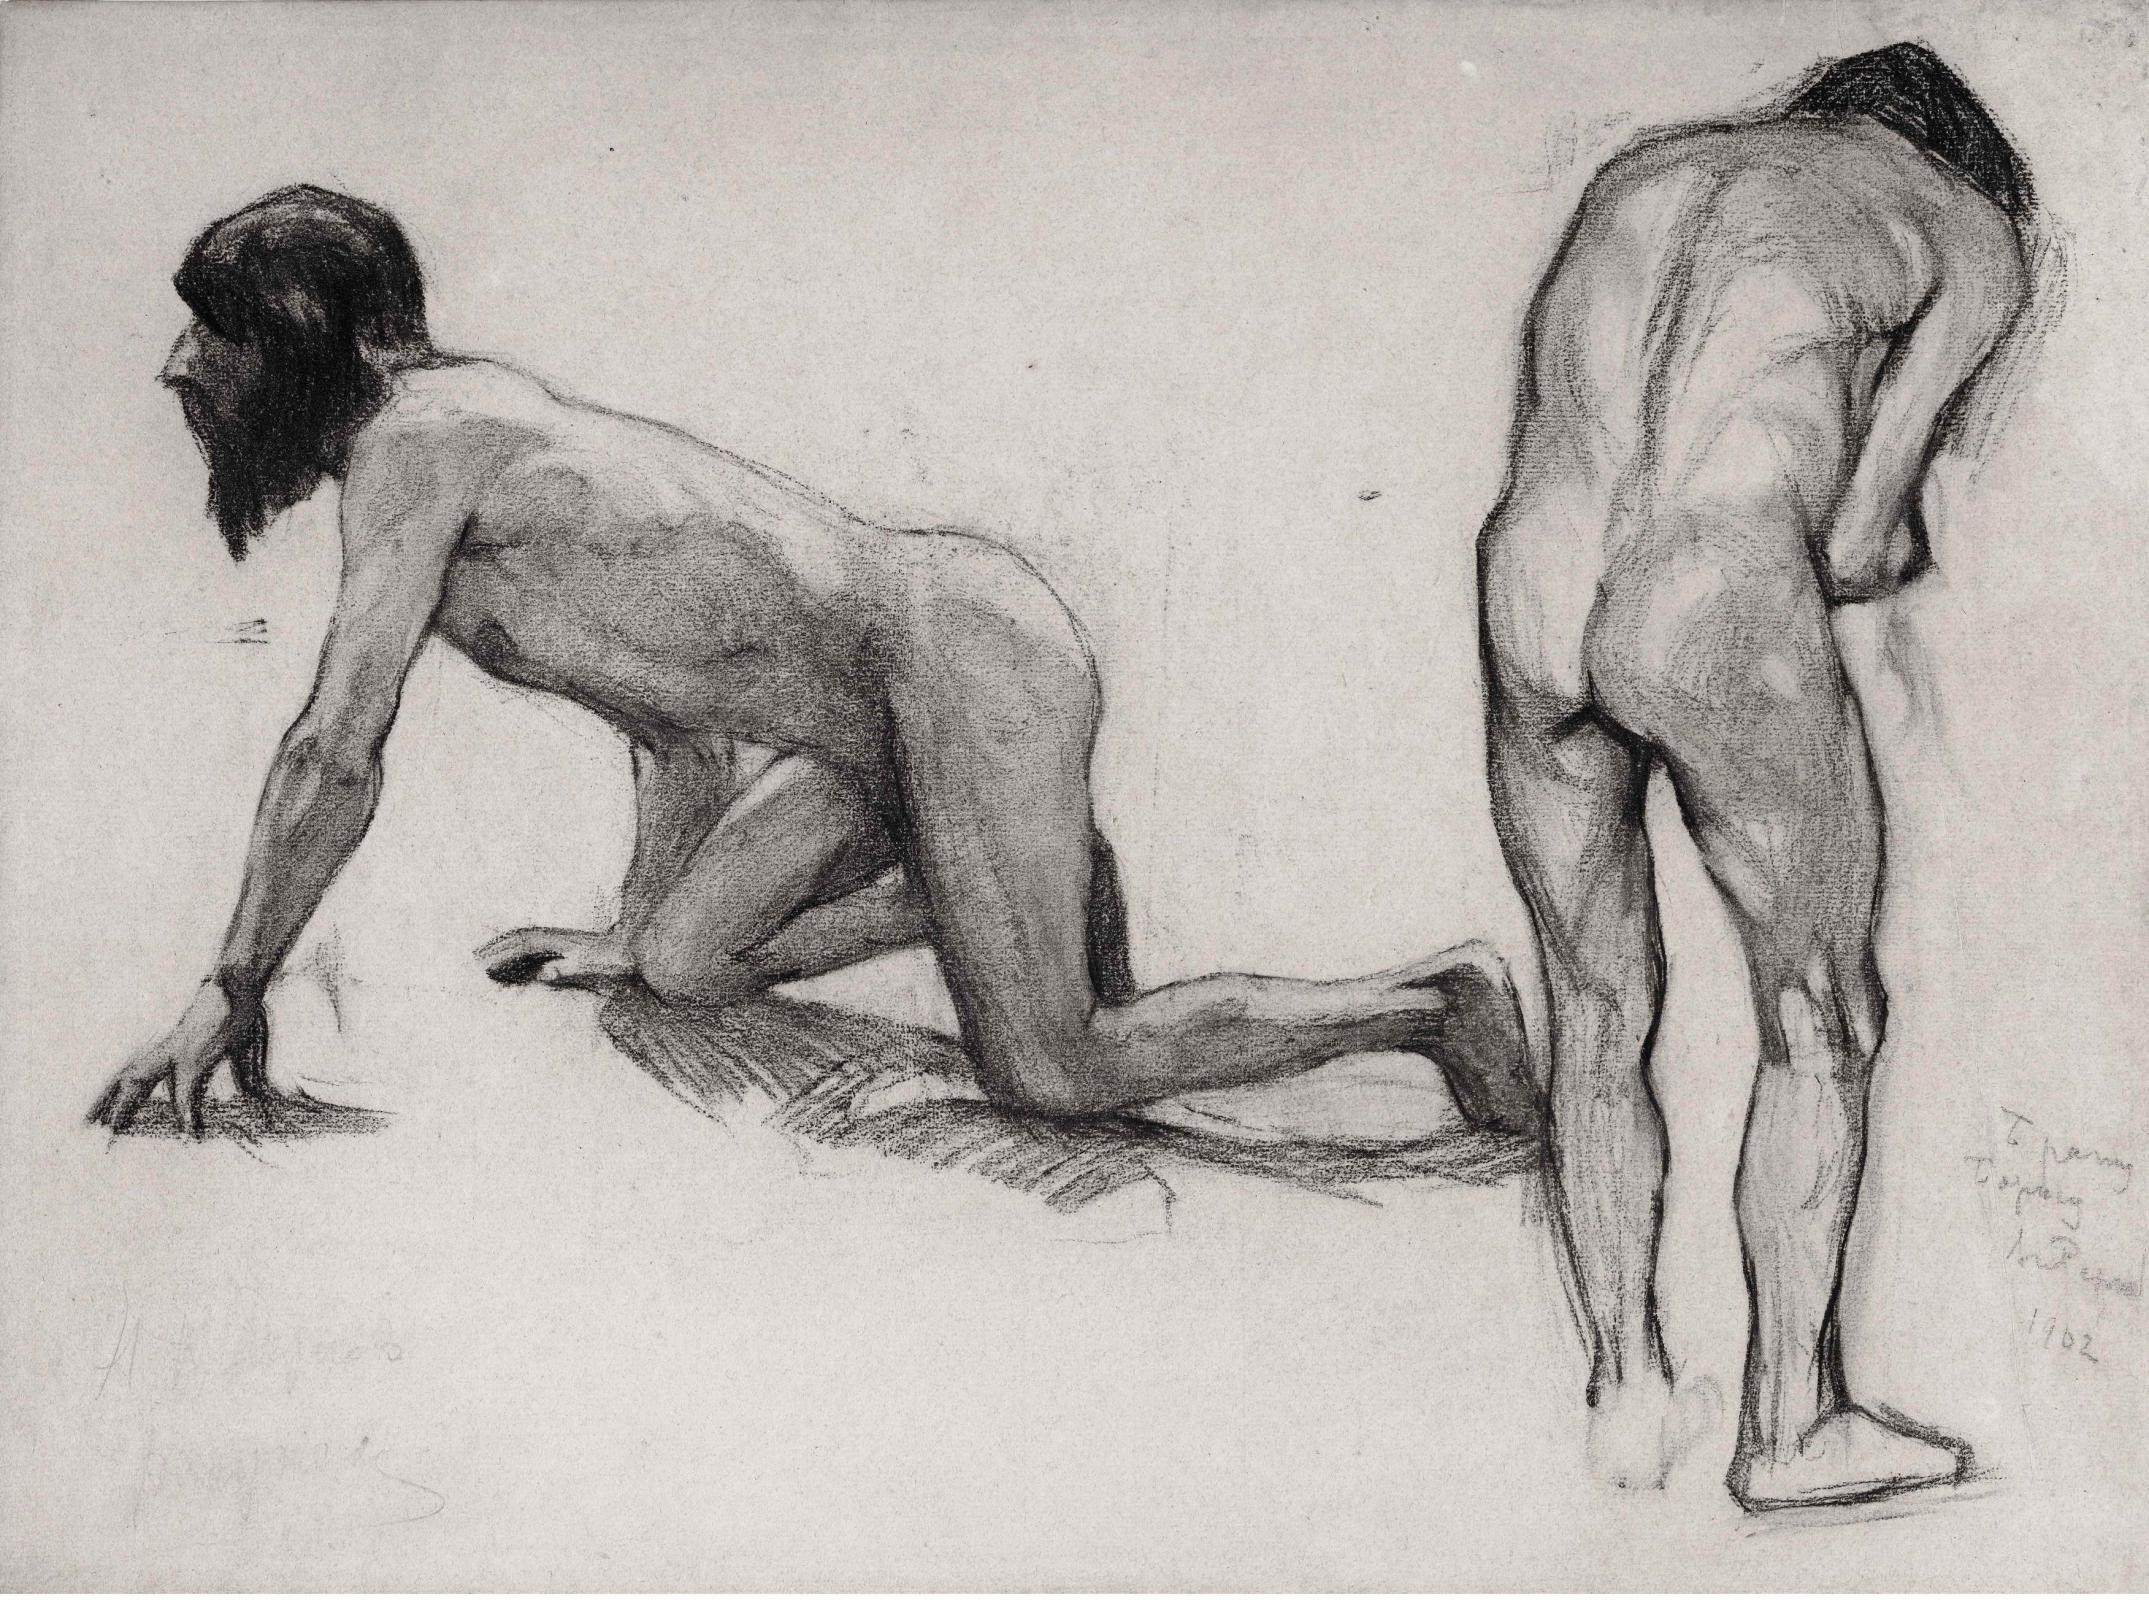 Н.К.Рерих. Два натурщика (Натурщики). 1901